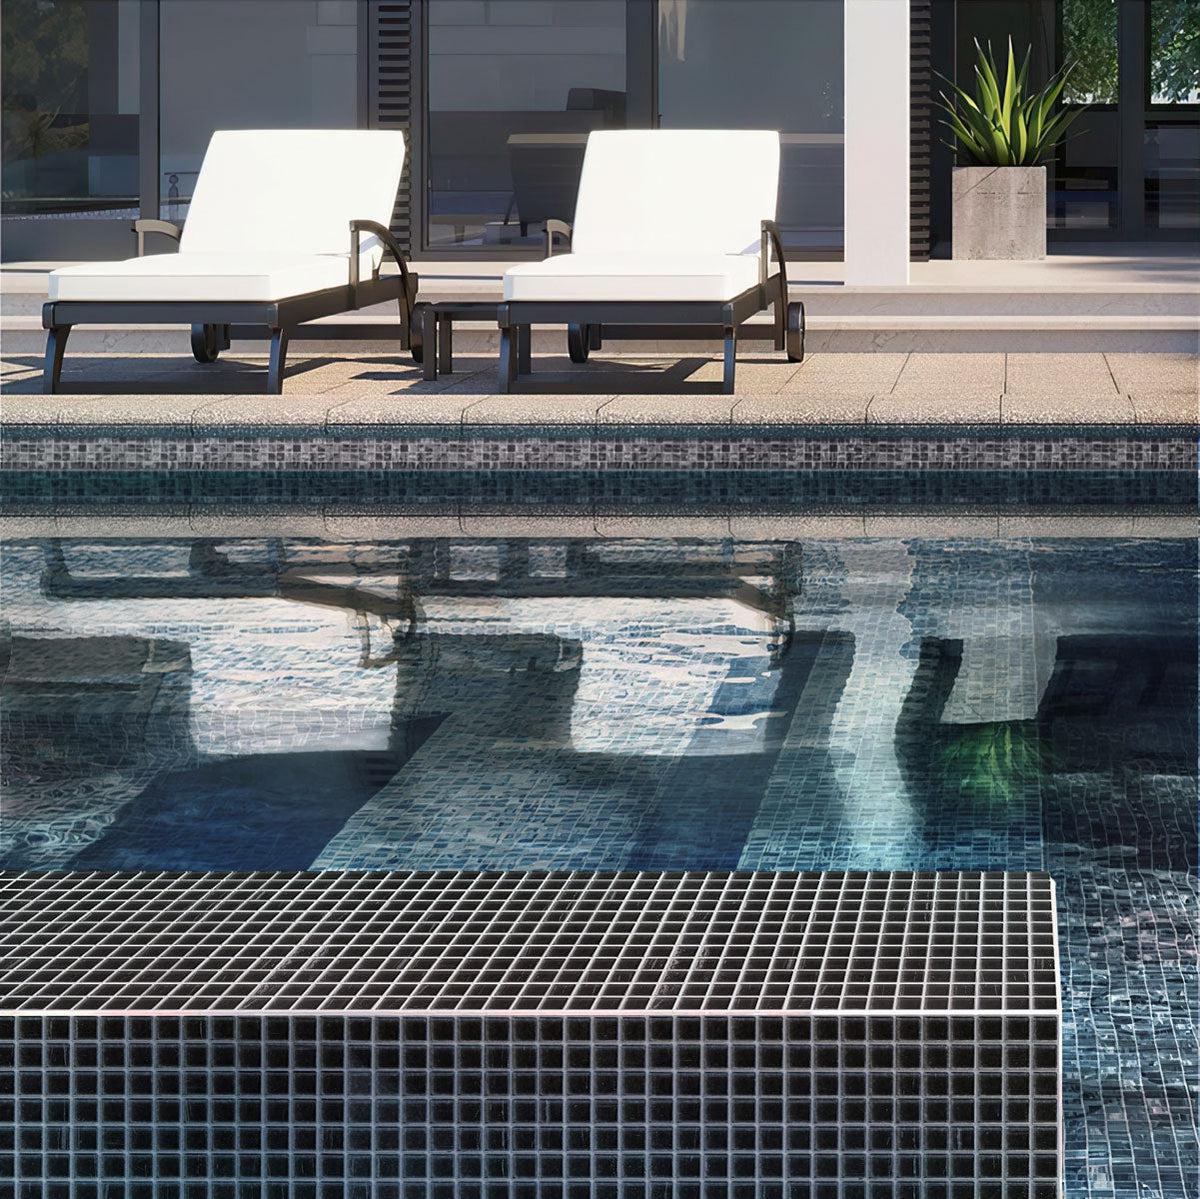 Black brushed glass tile swimming pool facing in sunlight